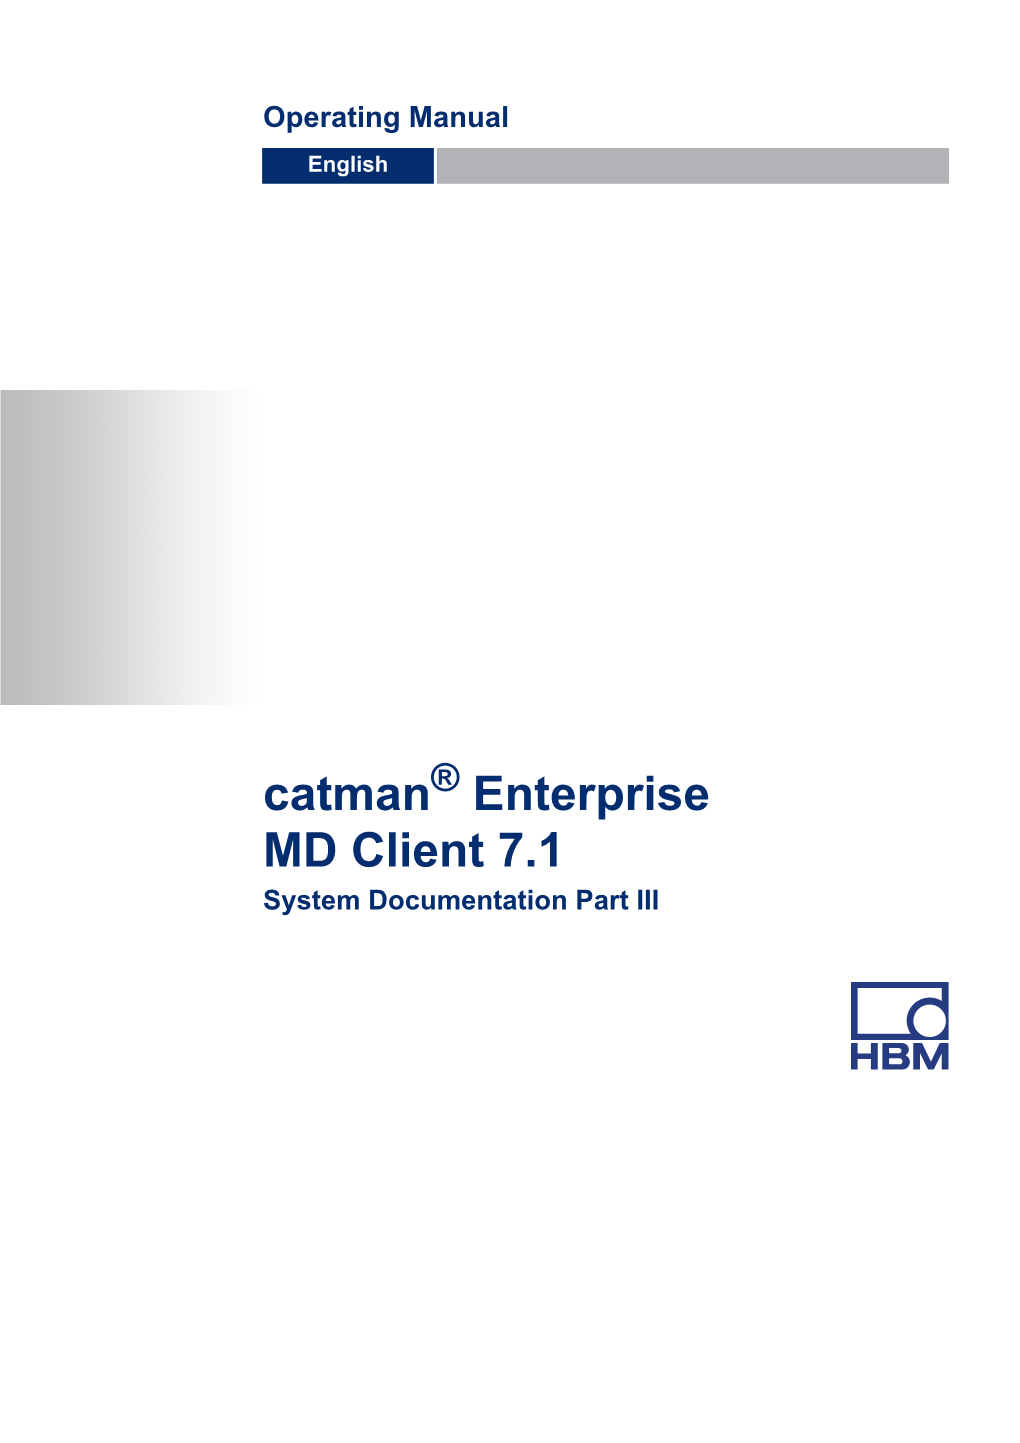 Catman Enterprise MD Client 7.1 System Documentation Part III